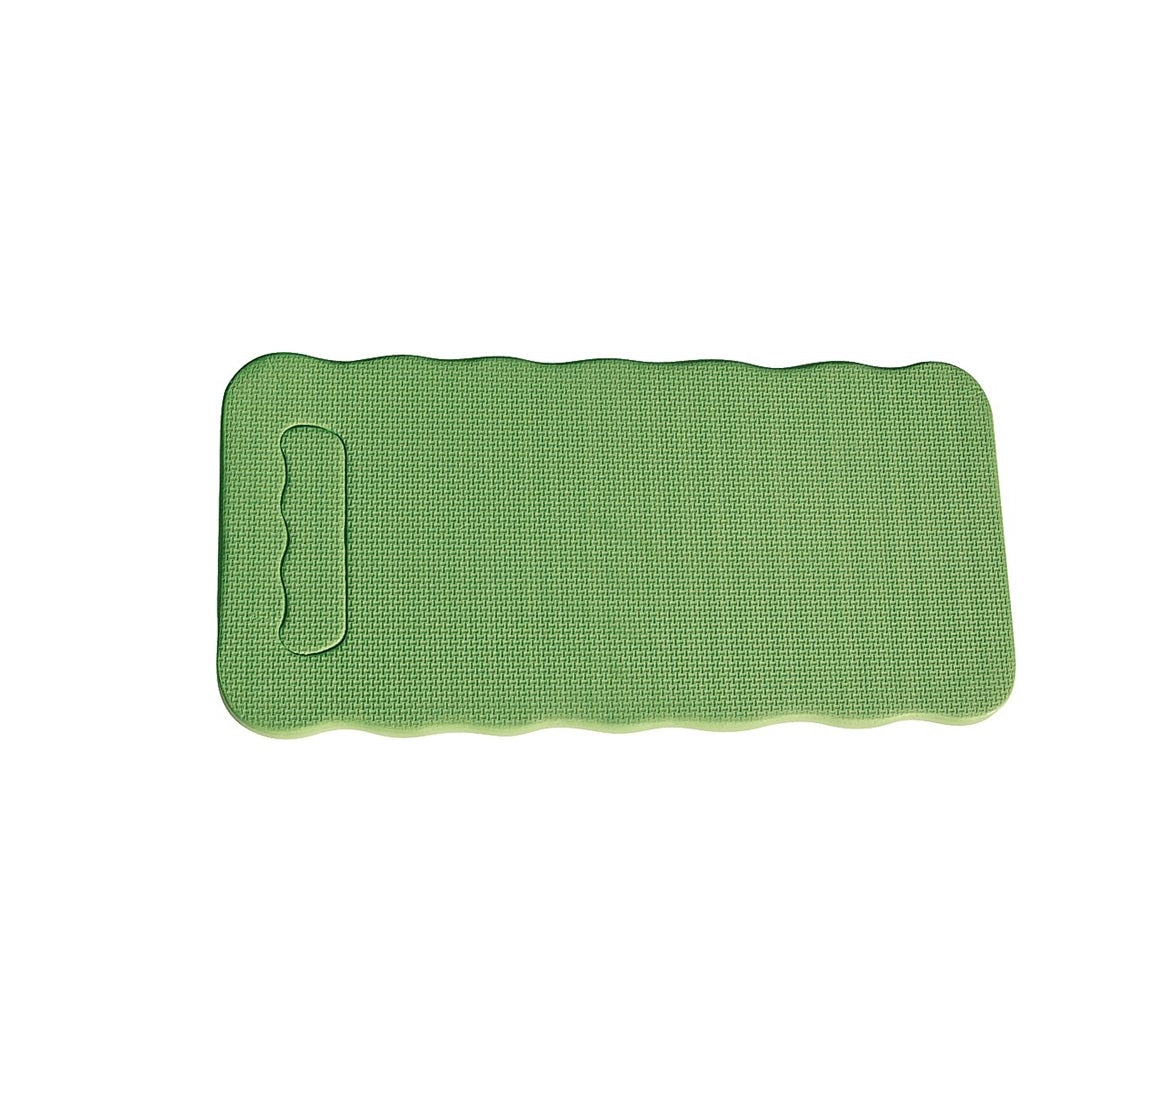 Landscapers Select GF-201 Kneeling Pad, Light Green, 20 in X 1 in X 10 in